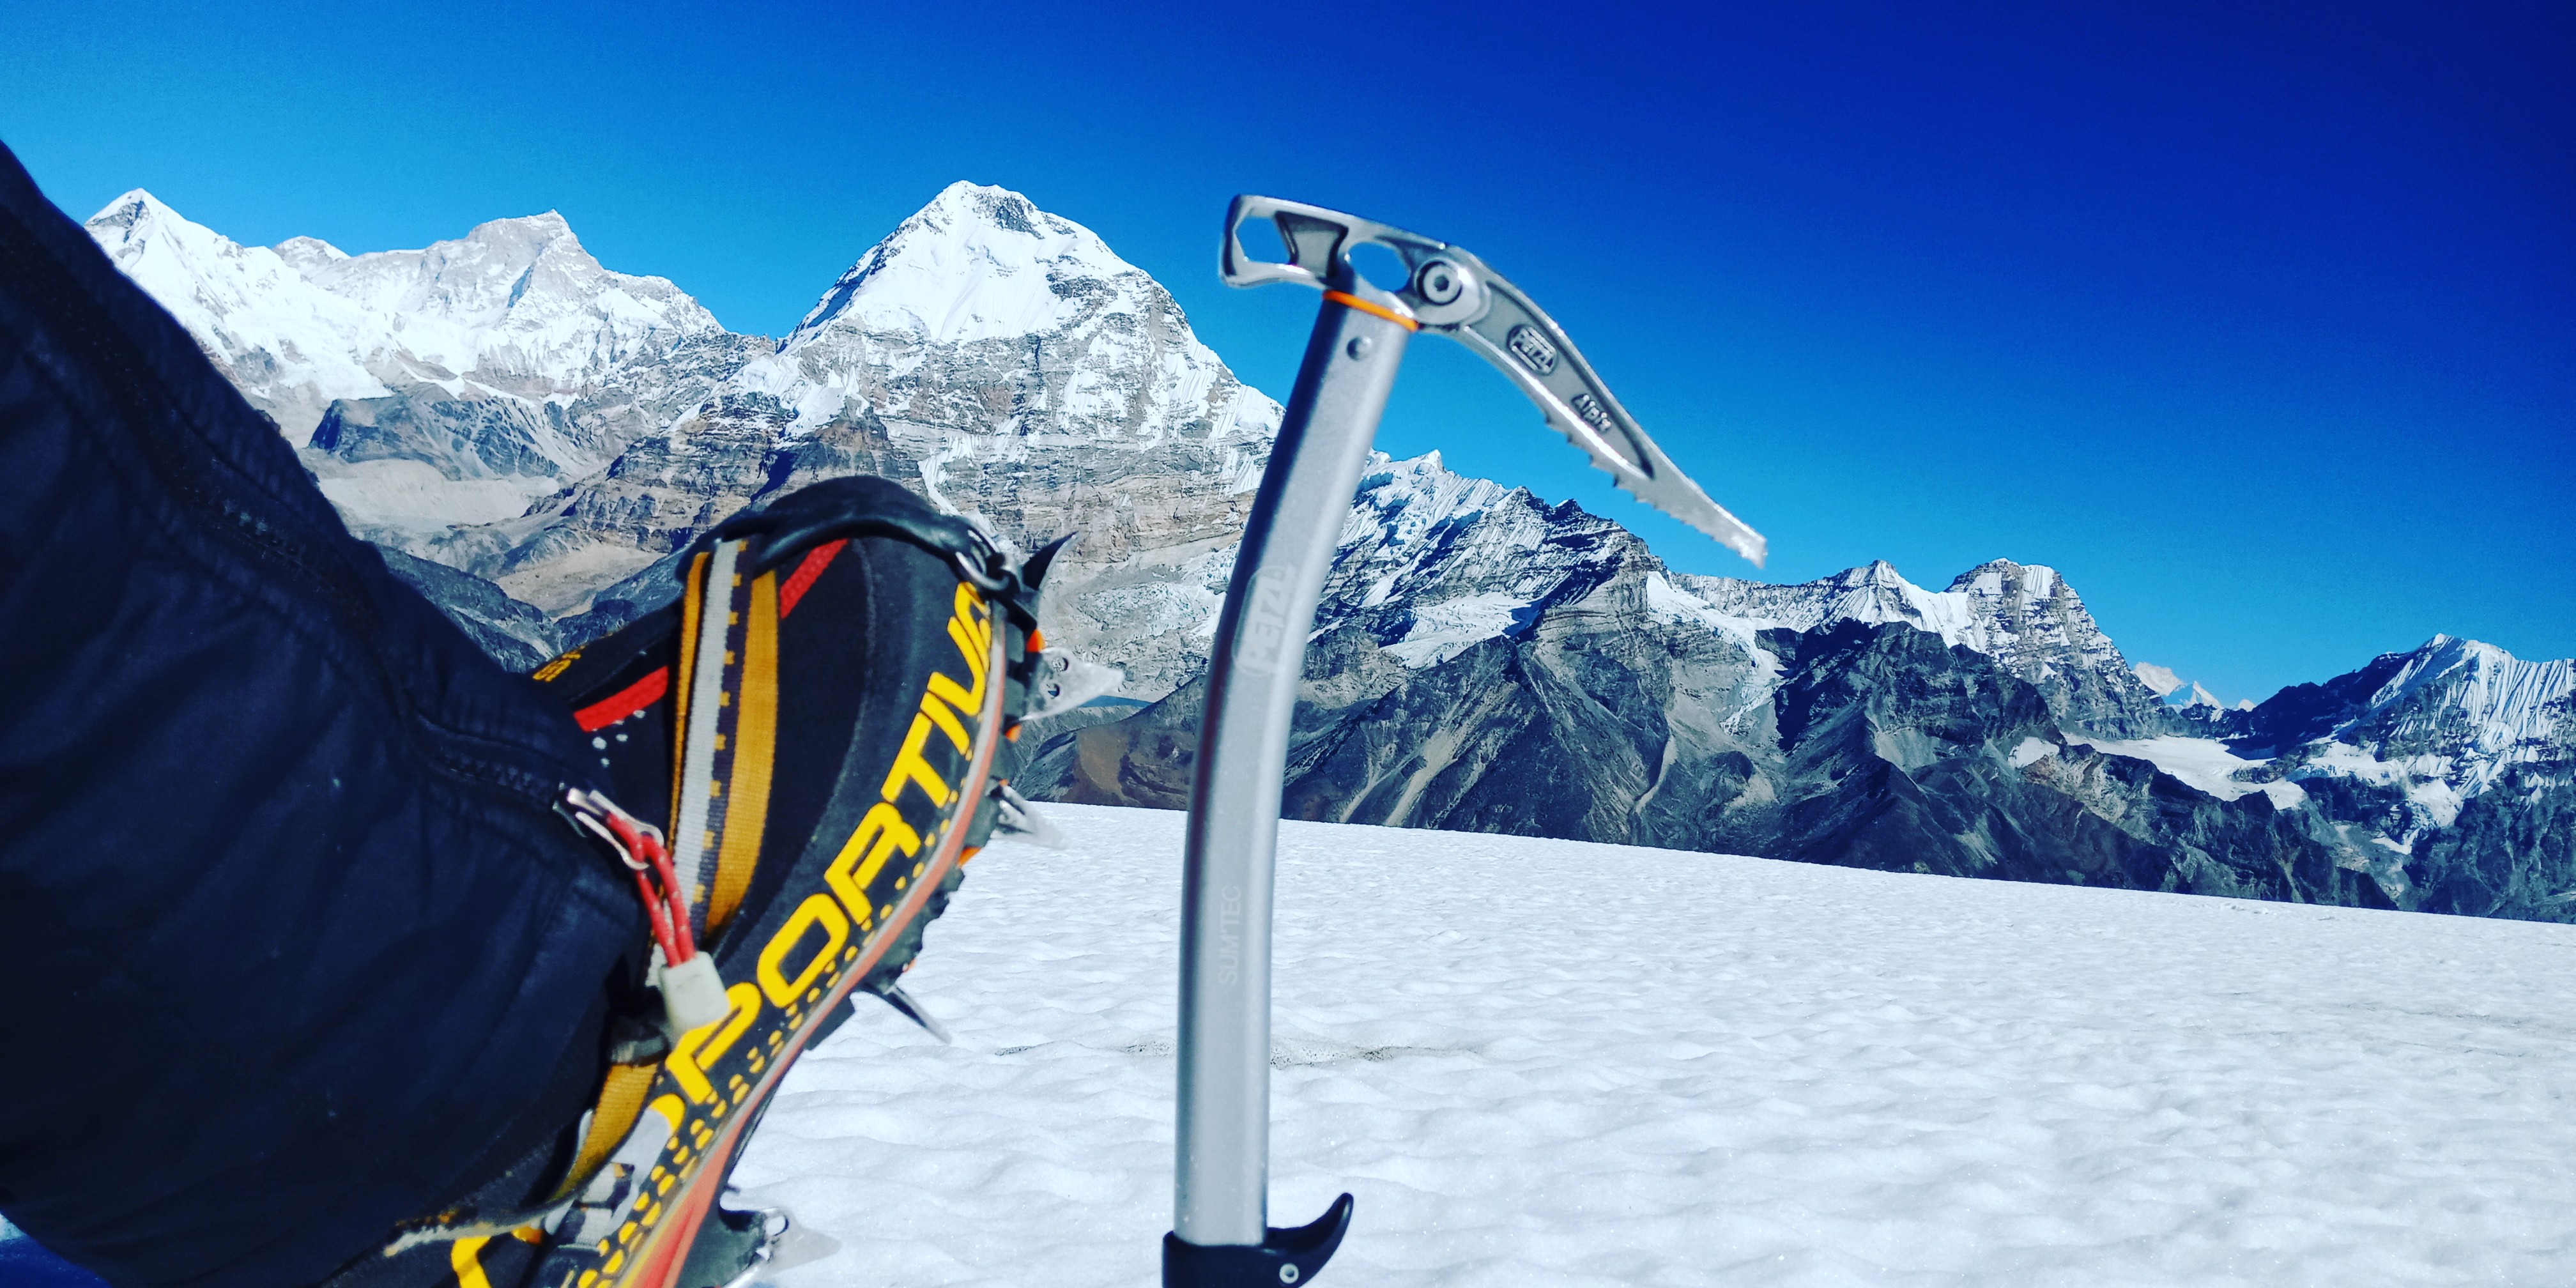 Lhotse (8516 m) Expedition